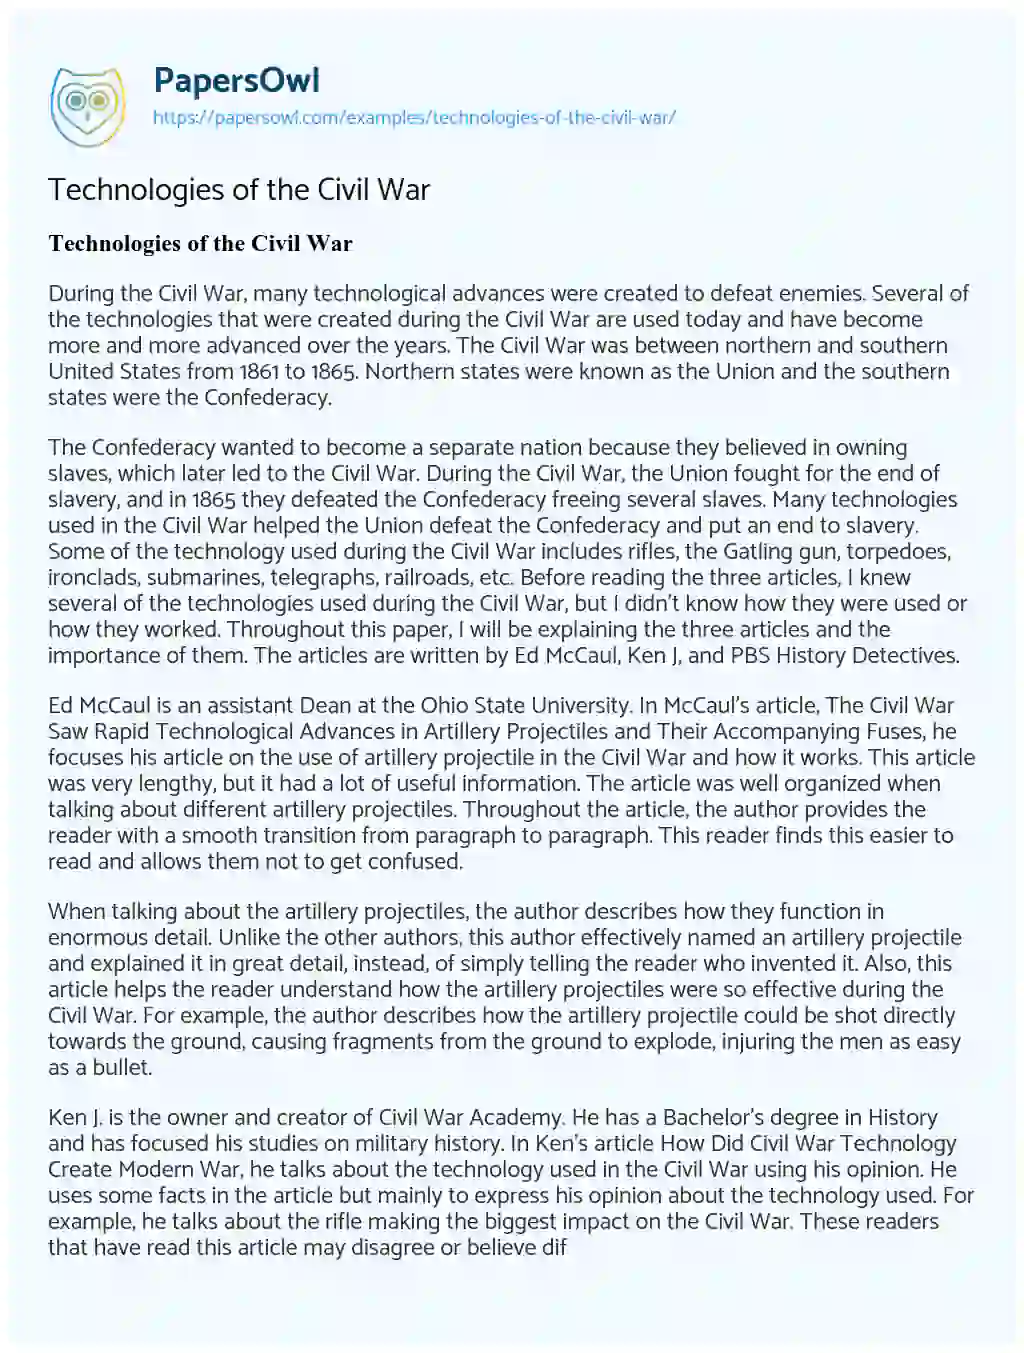 Technologies of the Civil War essay